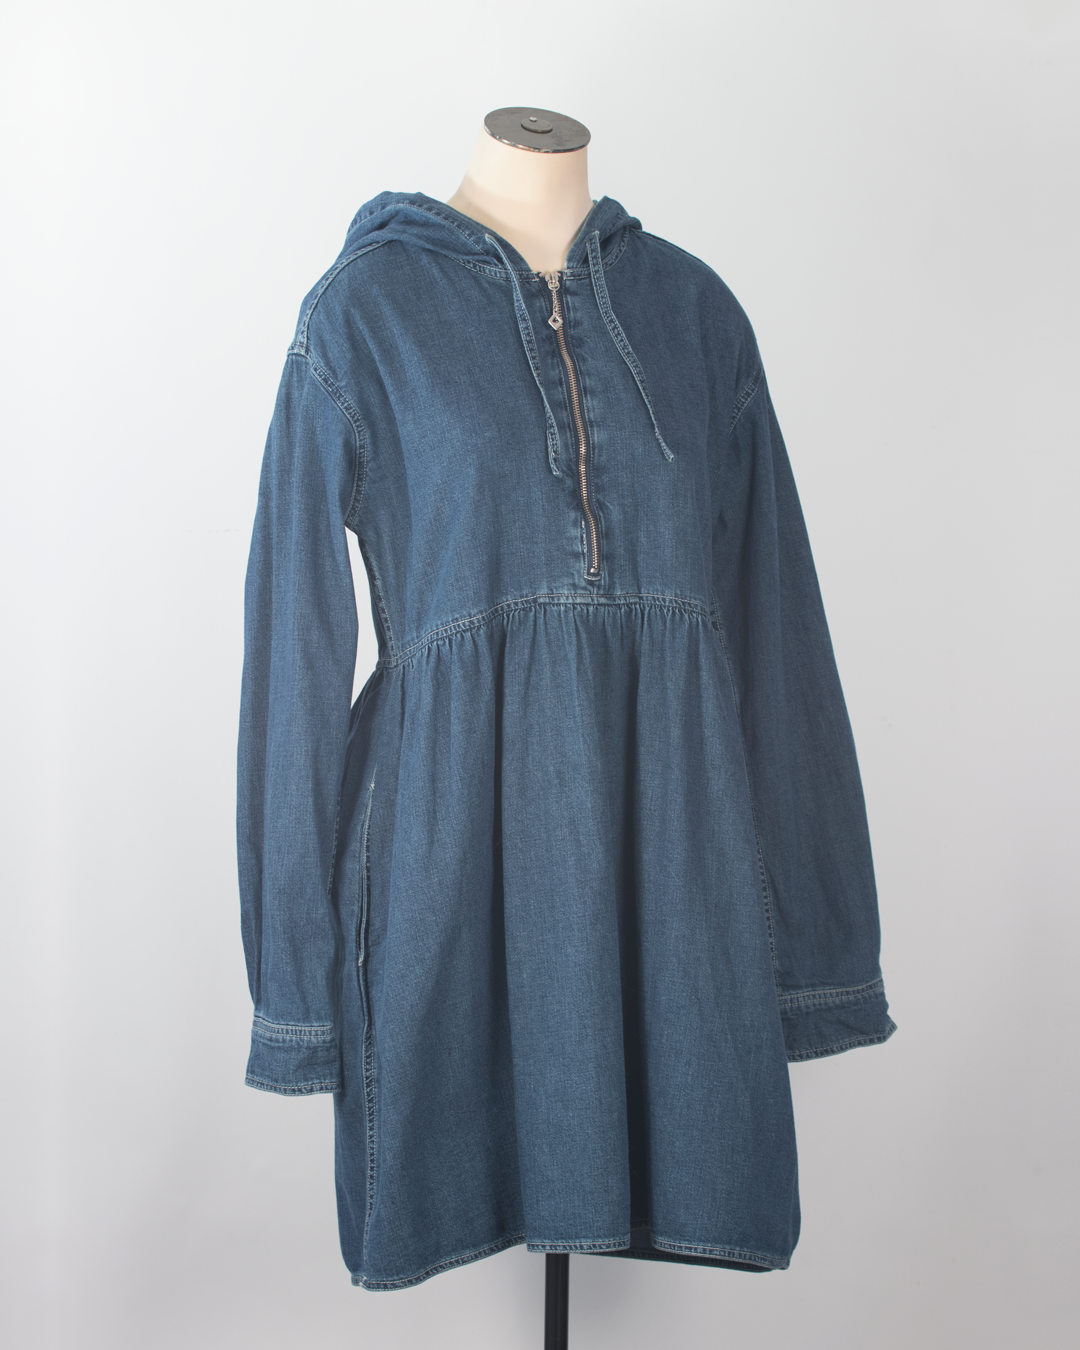 DKNY blue denim hooded babydoll dress women's small